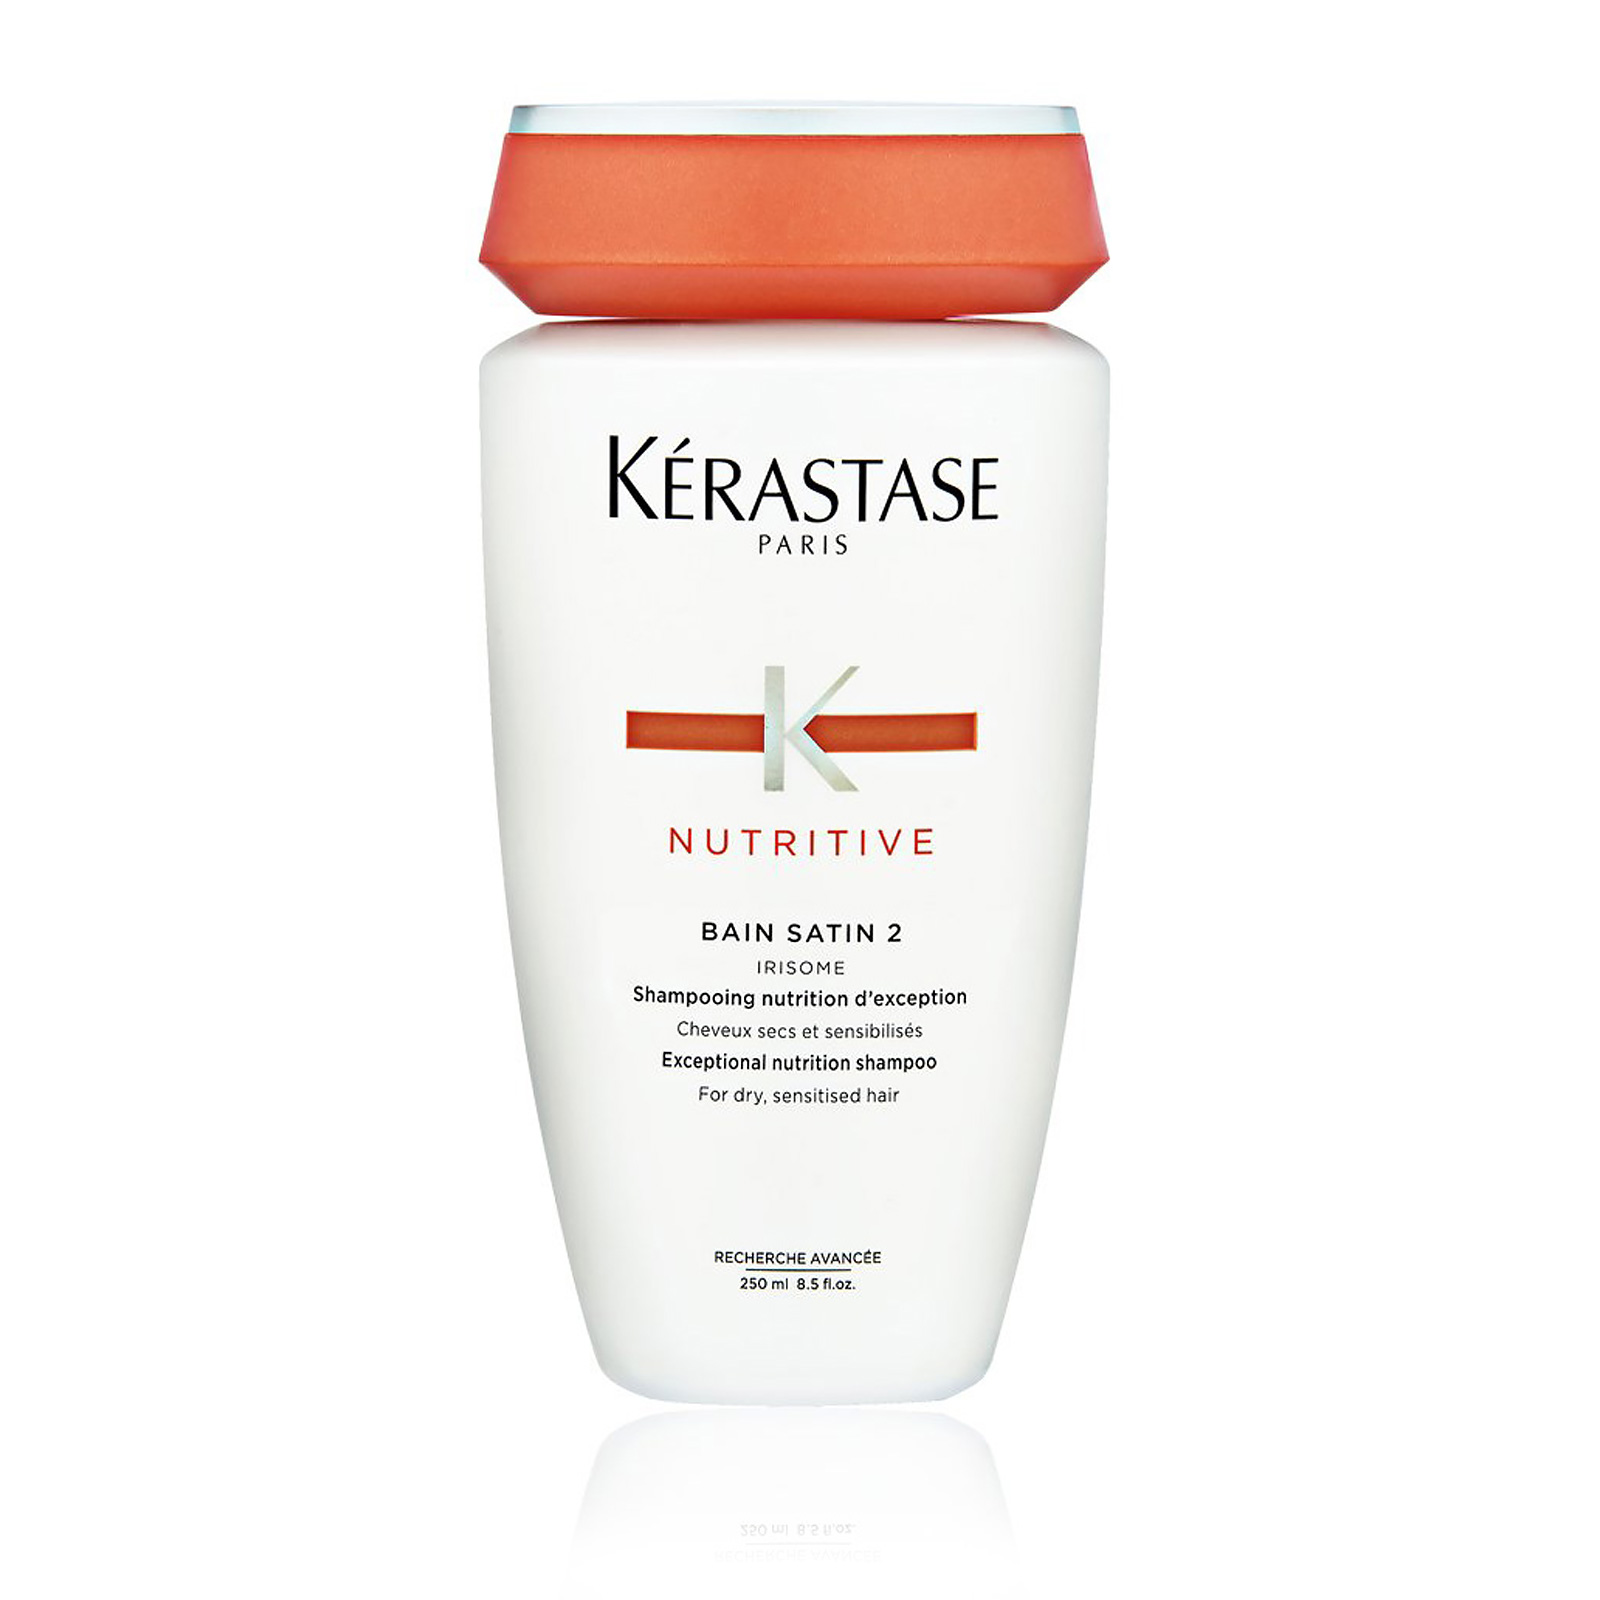 Kérastase Paris Nutritive Bain Satin Irisome Exceptional Nutrition (For Dry to Sensitised Hair)250 ml 8.5 oz